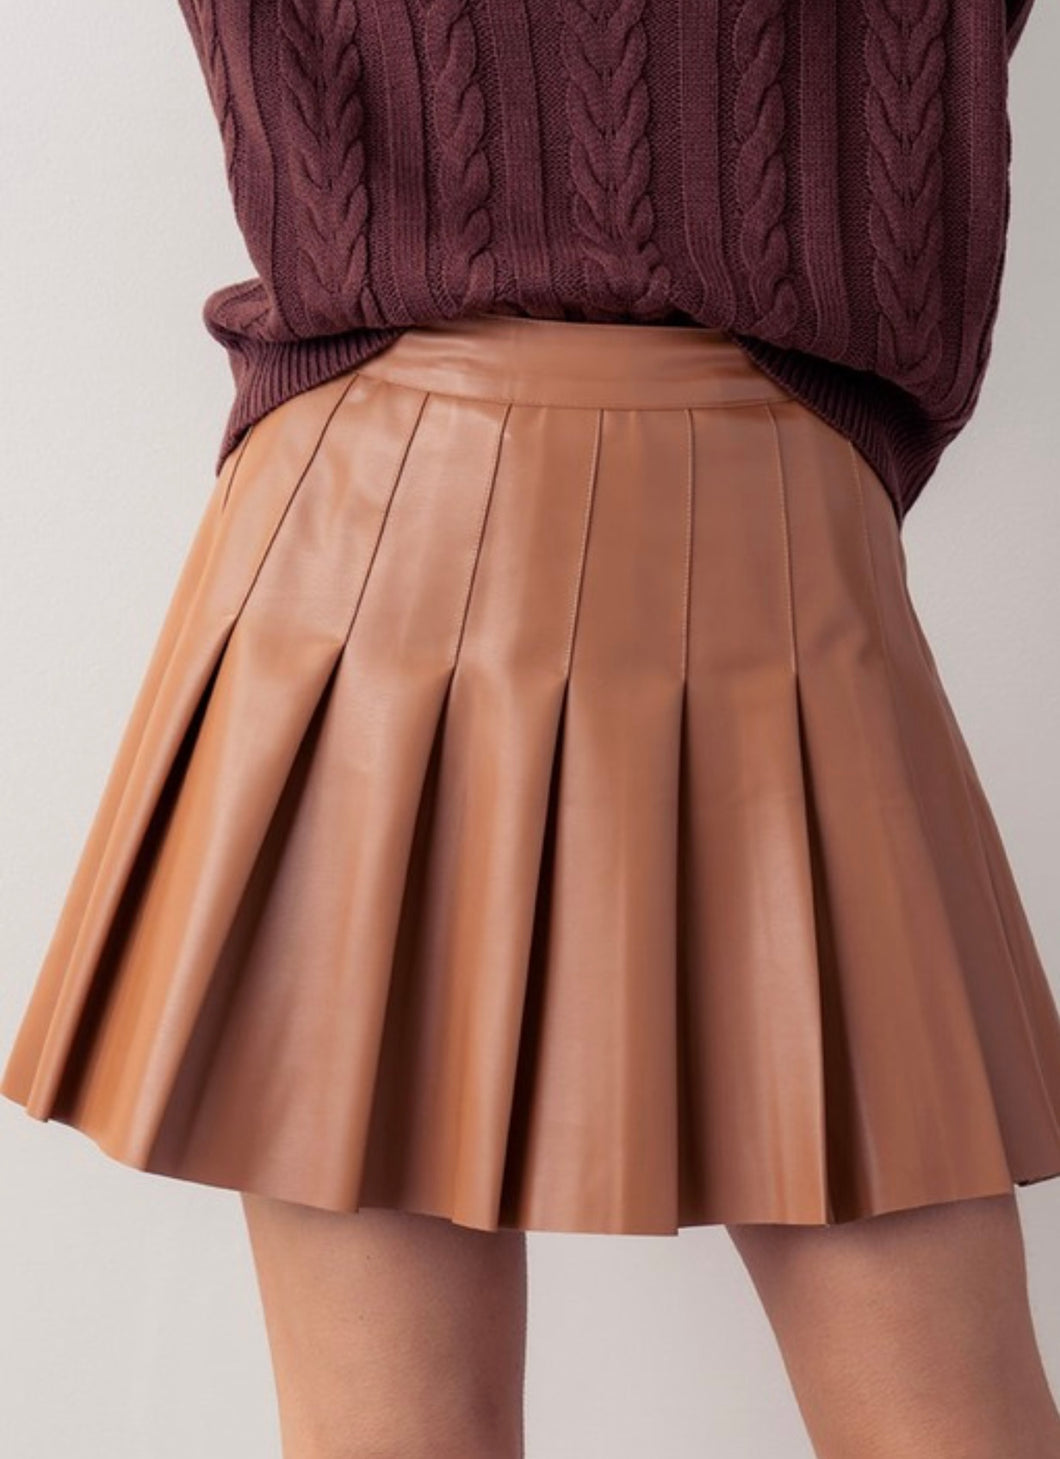 Shania High Rise Leather Mini Skirt - Camel